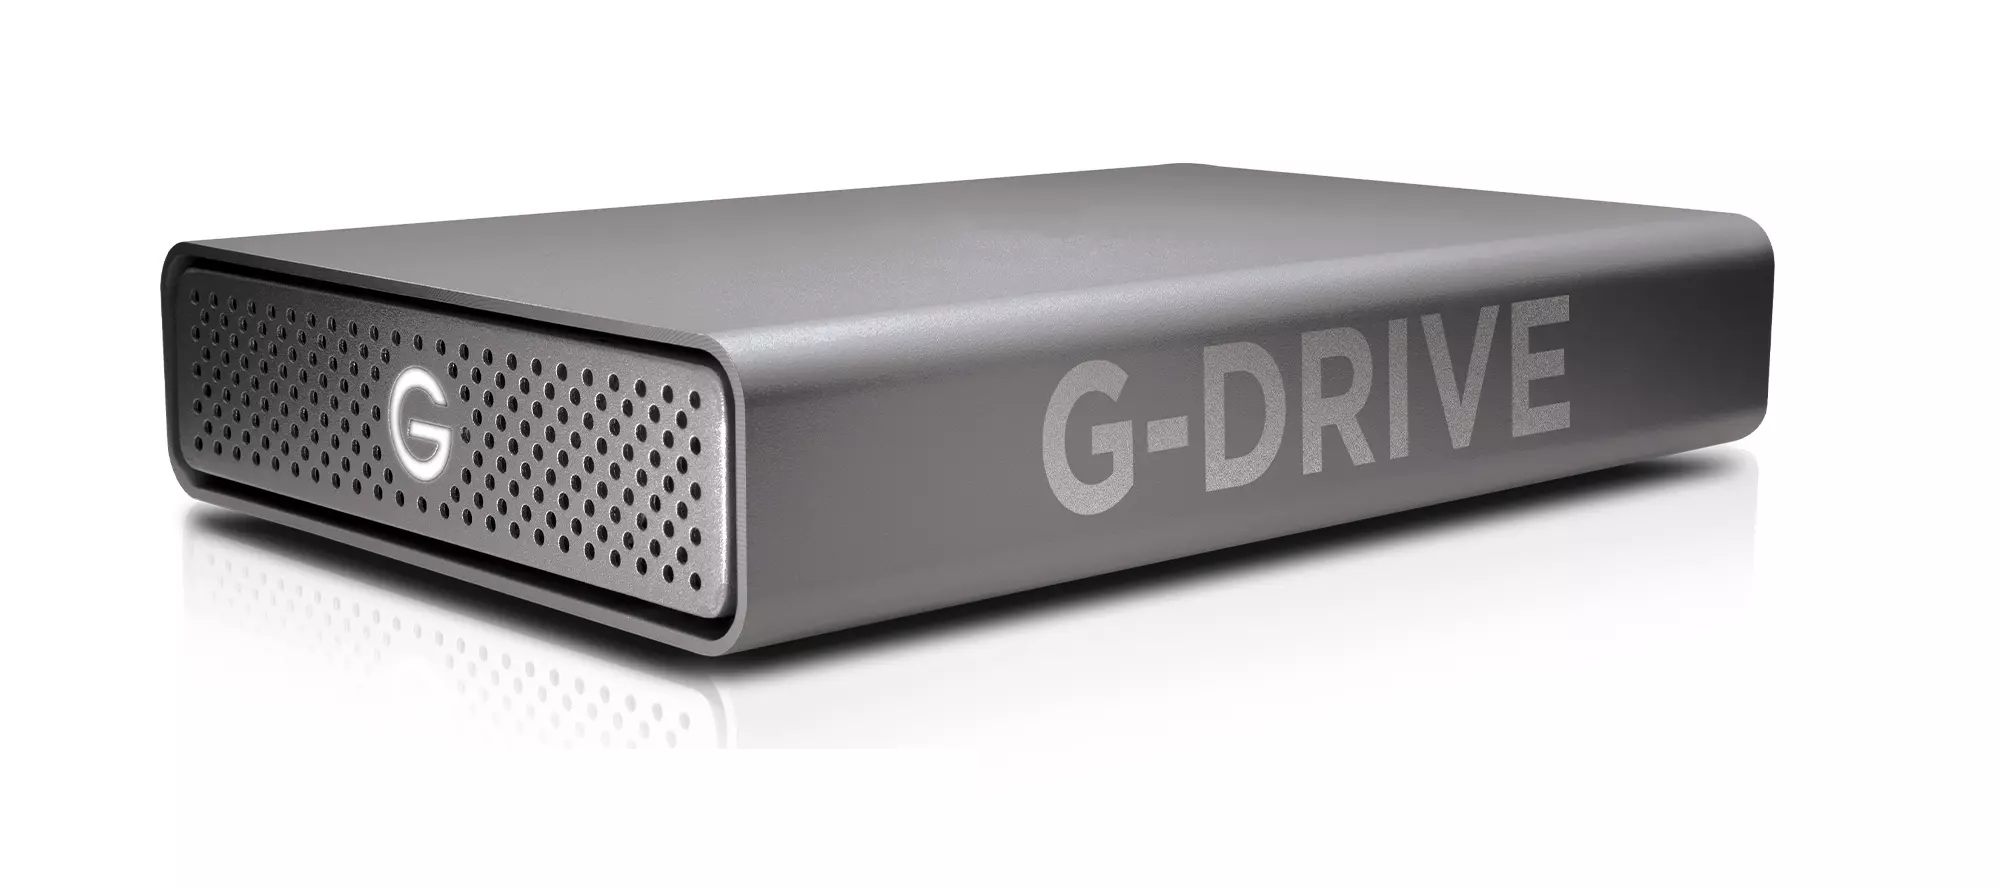 SanDisk G-Drive - External Hard Disk Drive